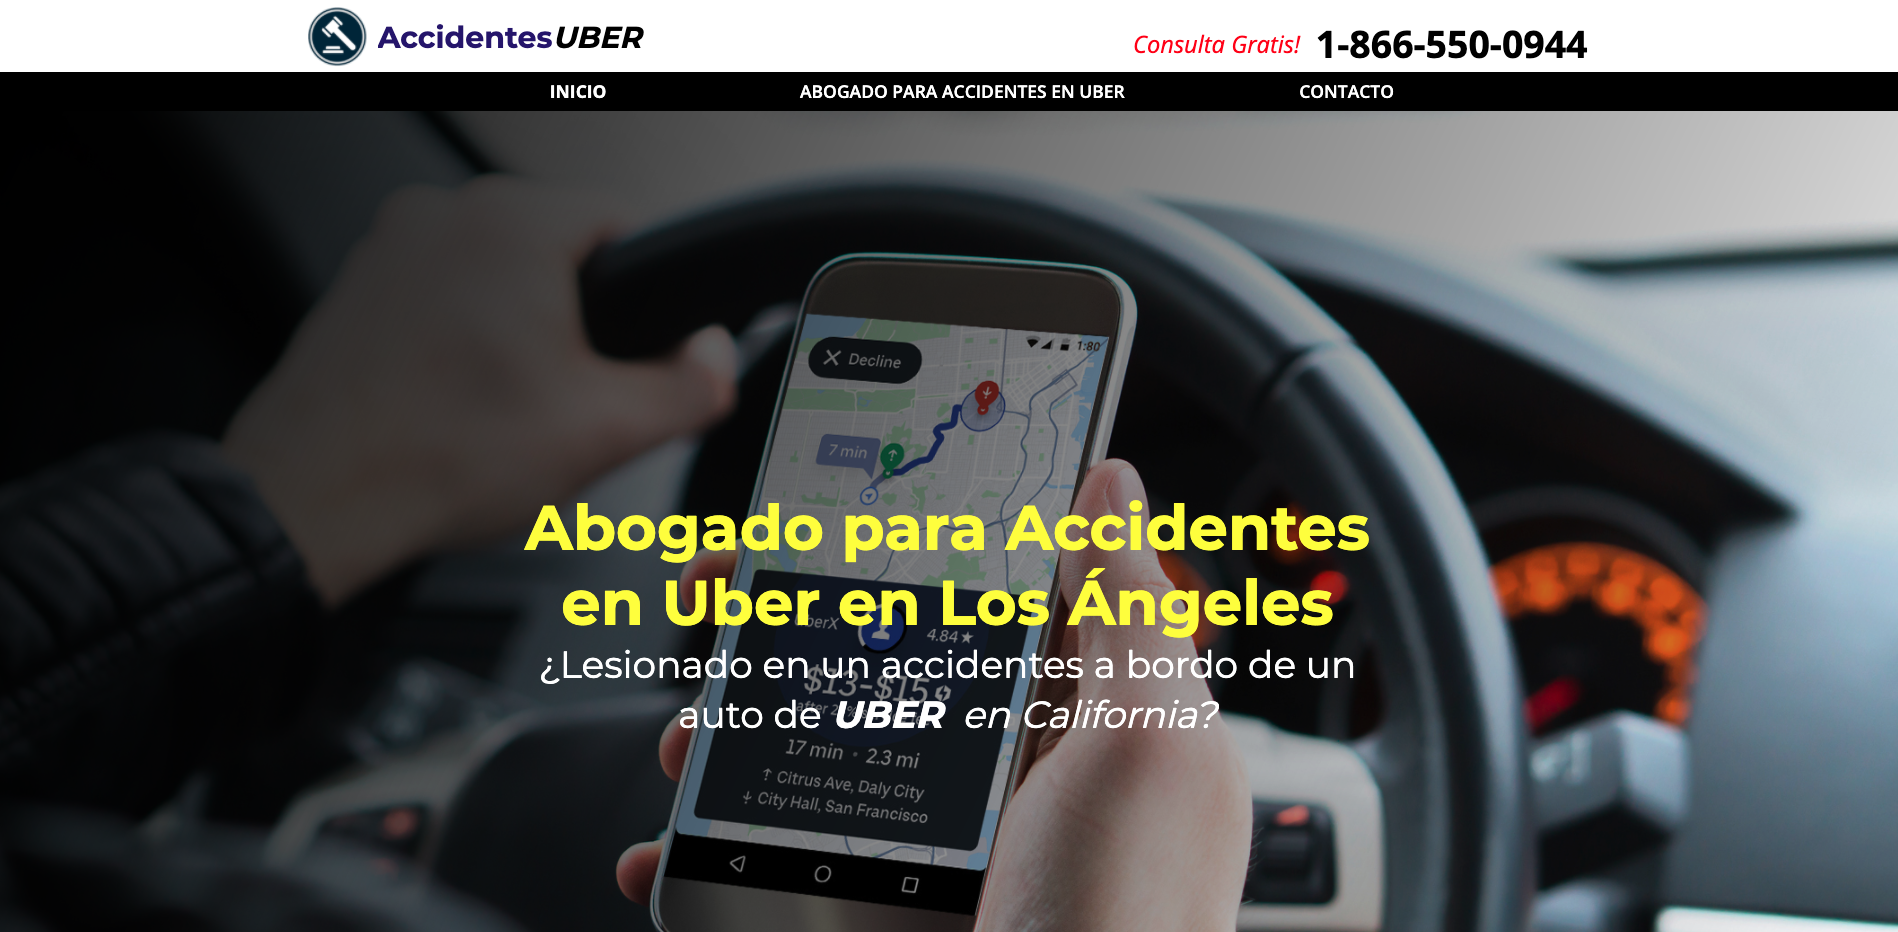 Uber accidente webstie for attorneys in Spanish